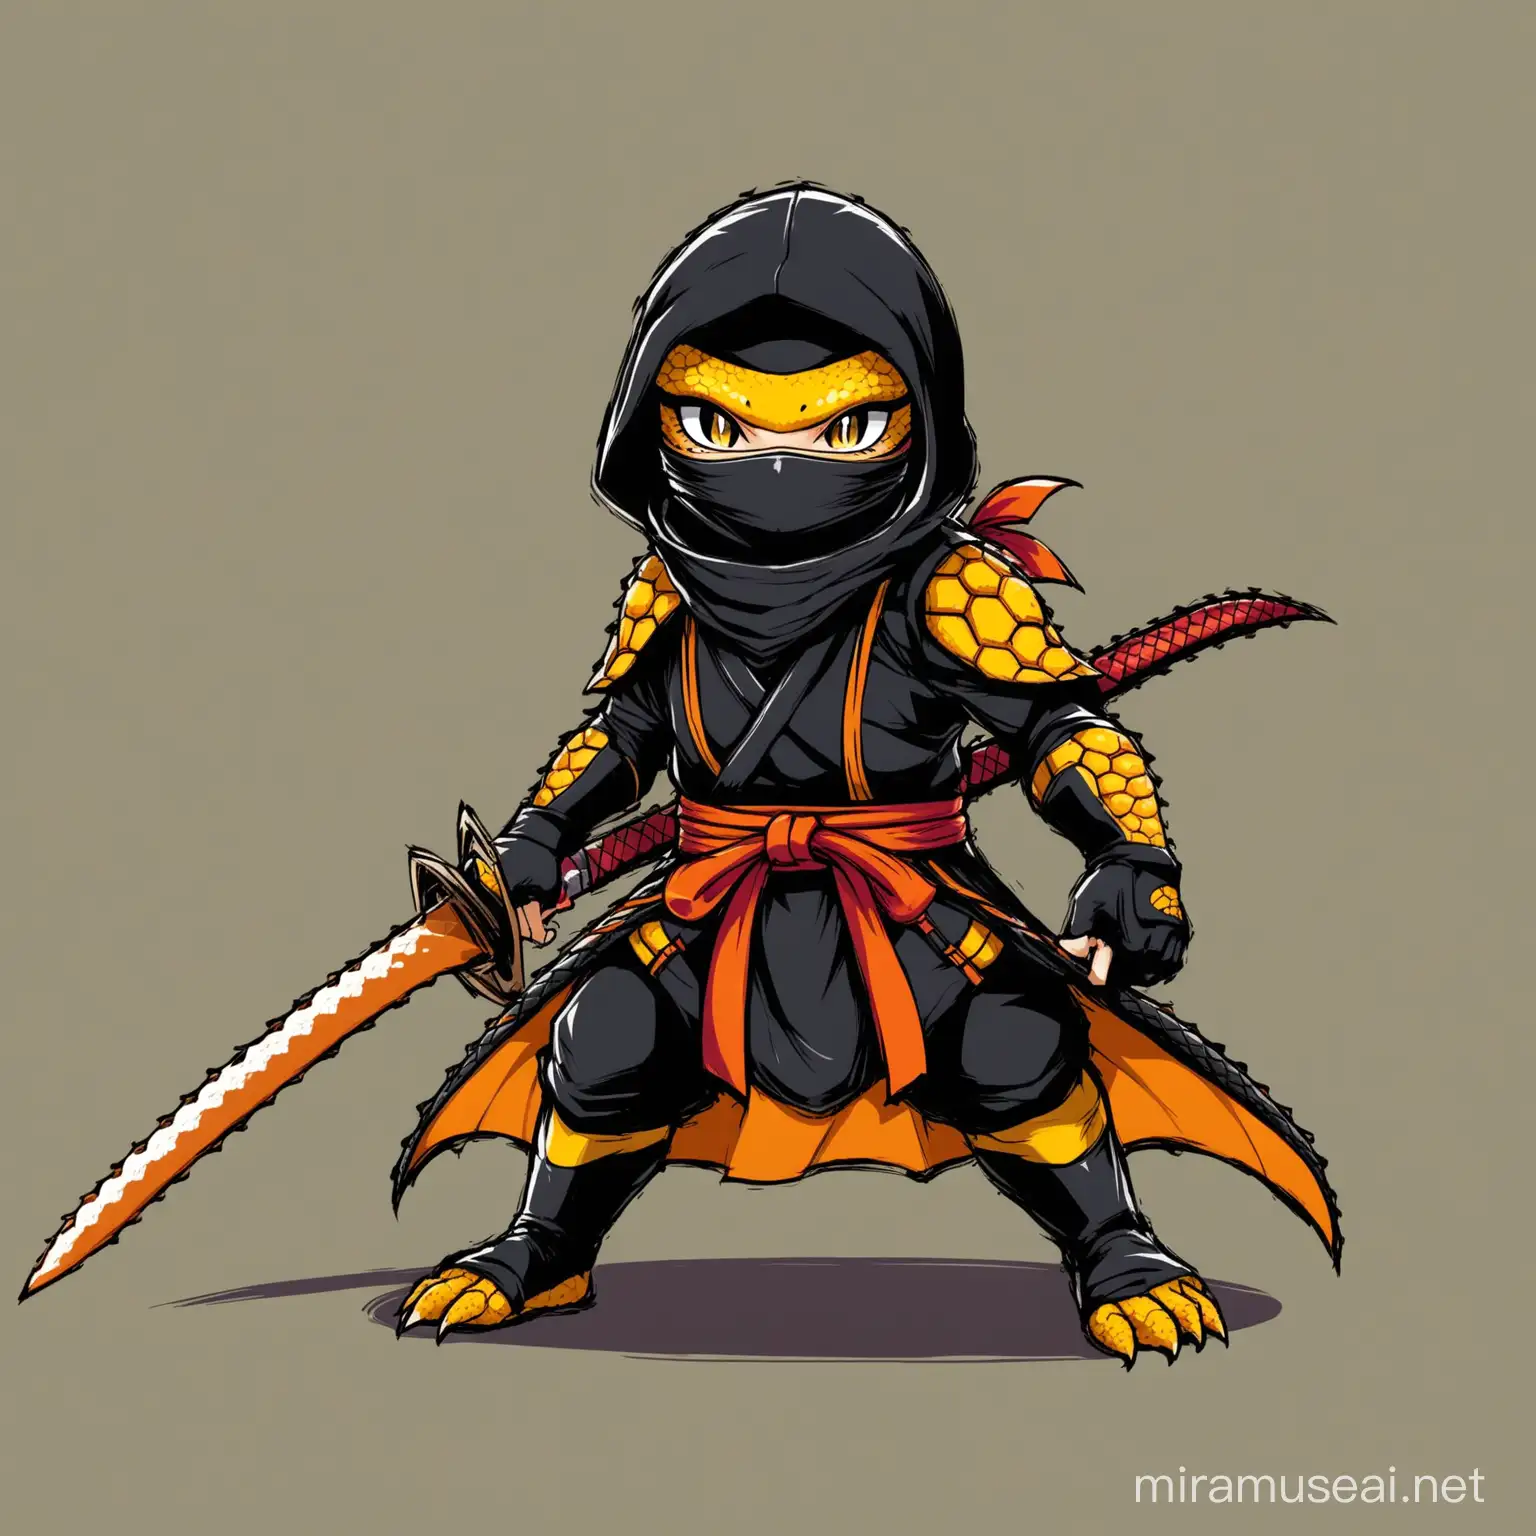 Stealthy Ninja Salamander on a Mission